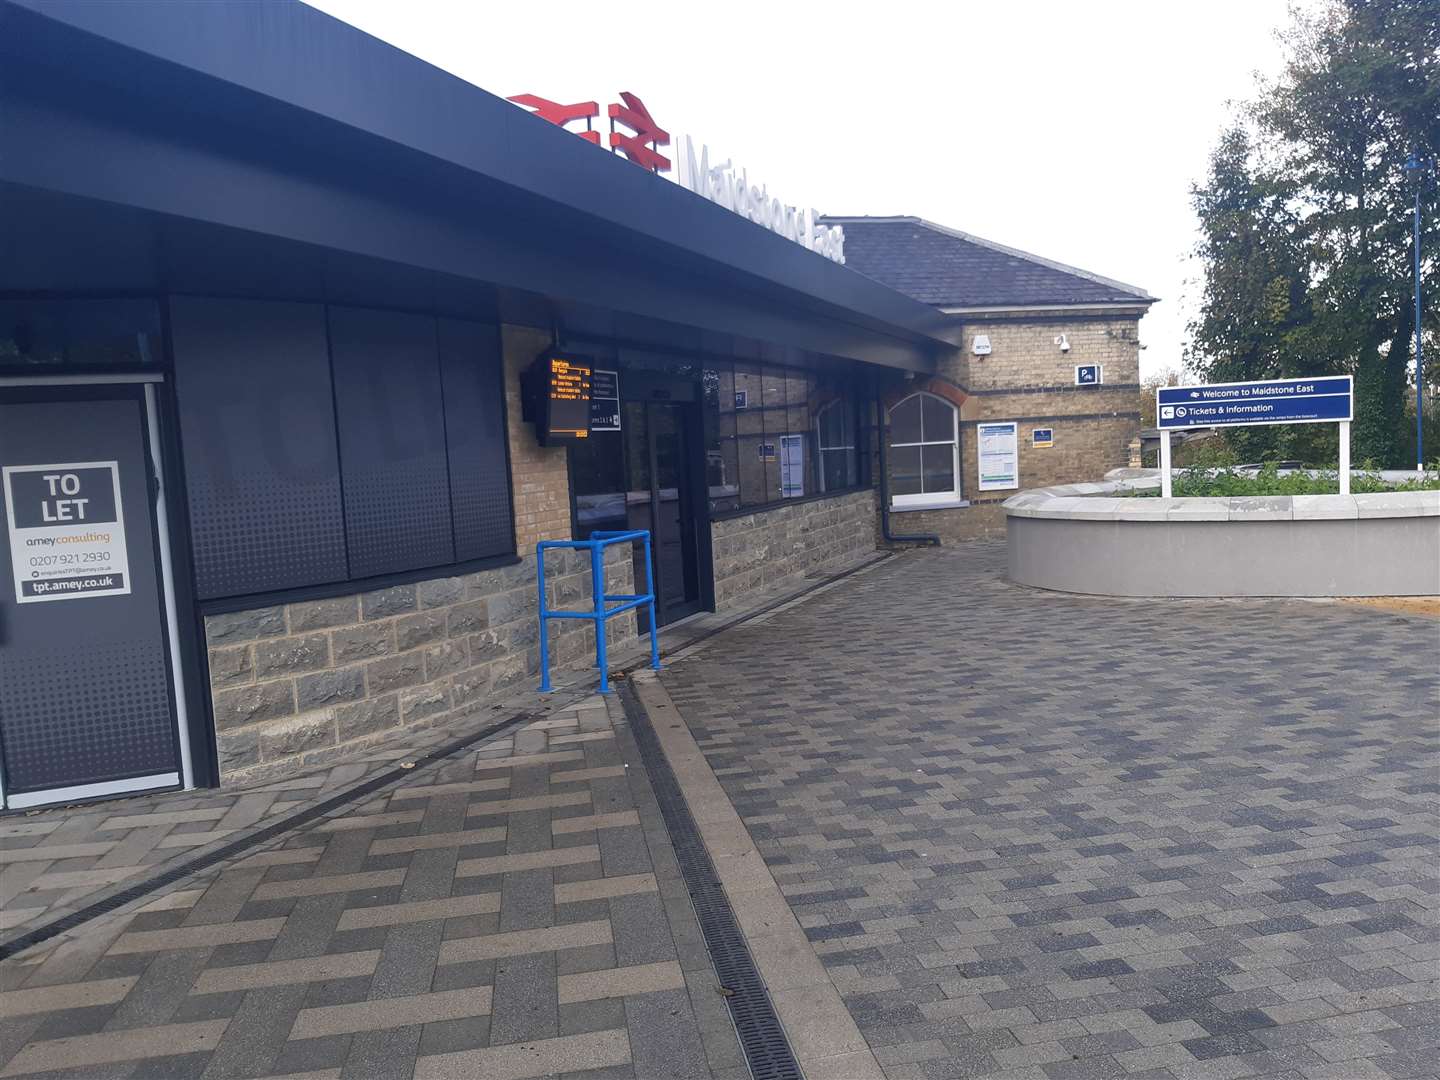 The refurbished Maidstone East Station